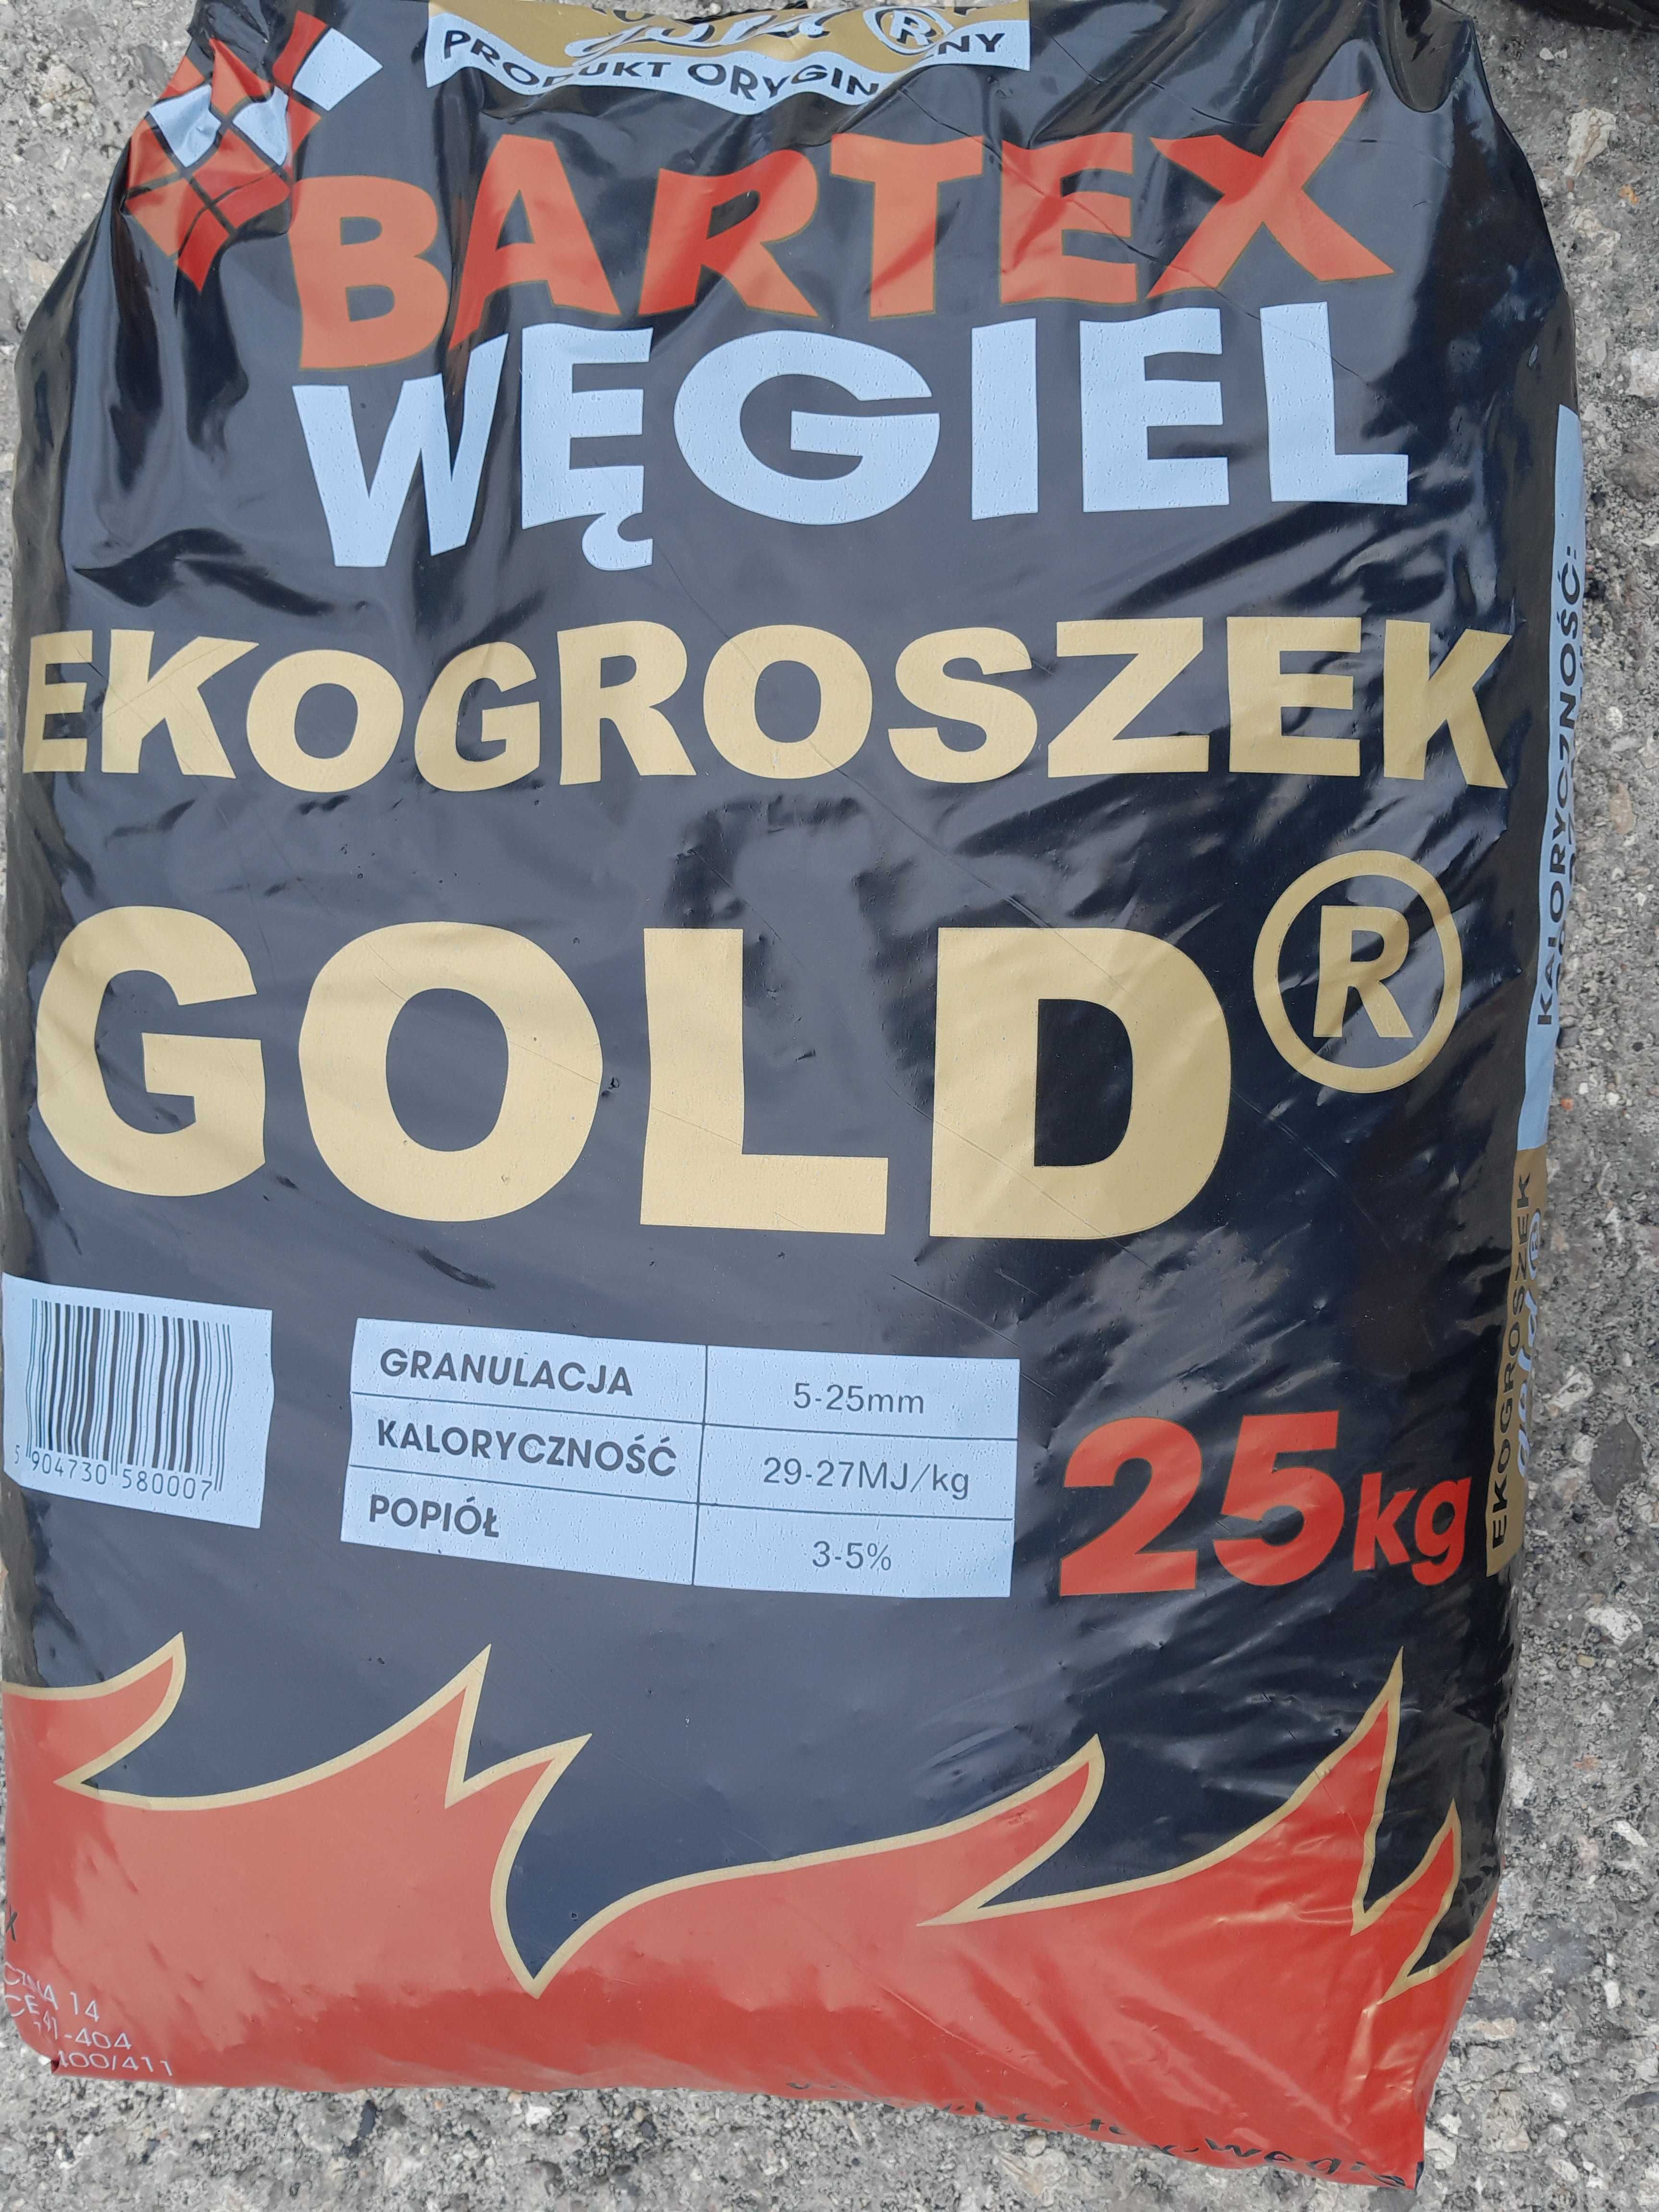 Węgiel Ekogroszek Bartex Gold